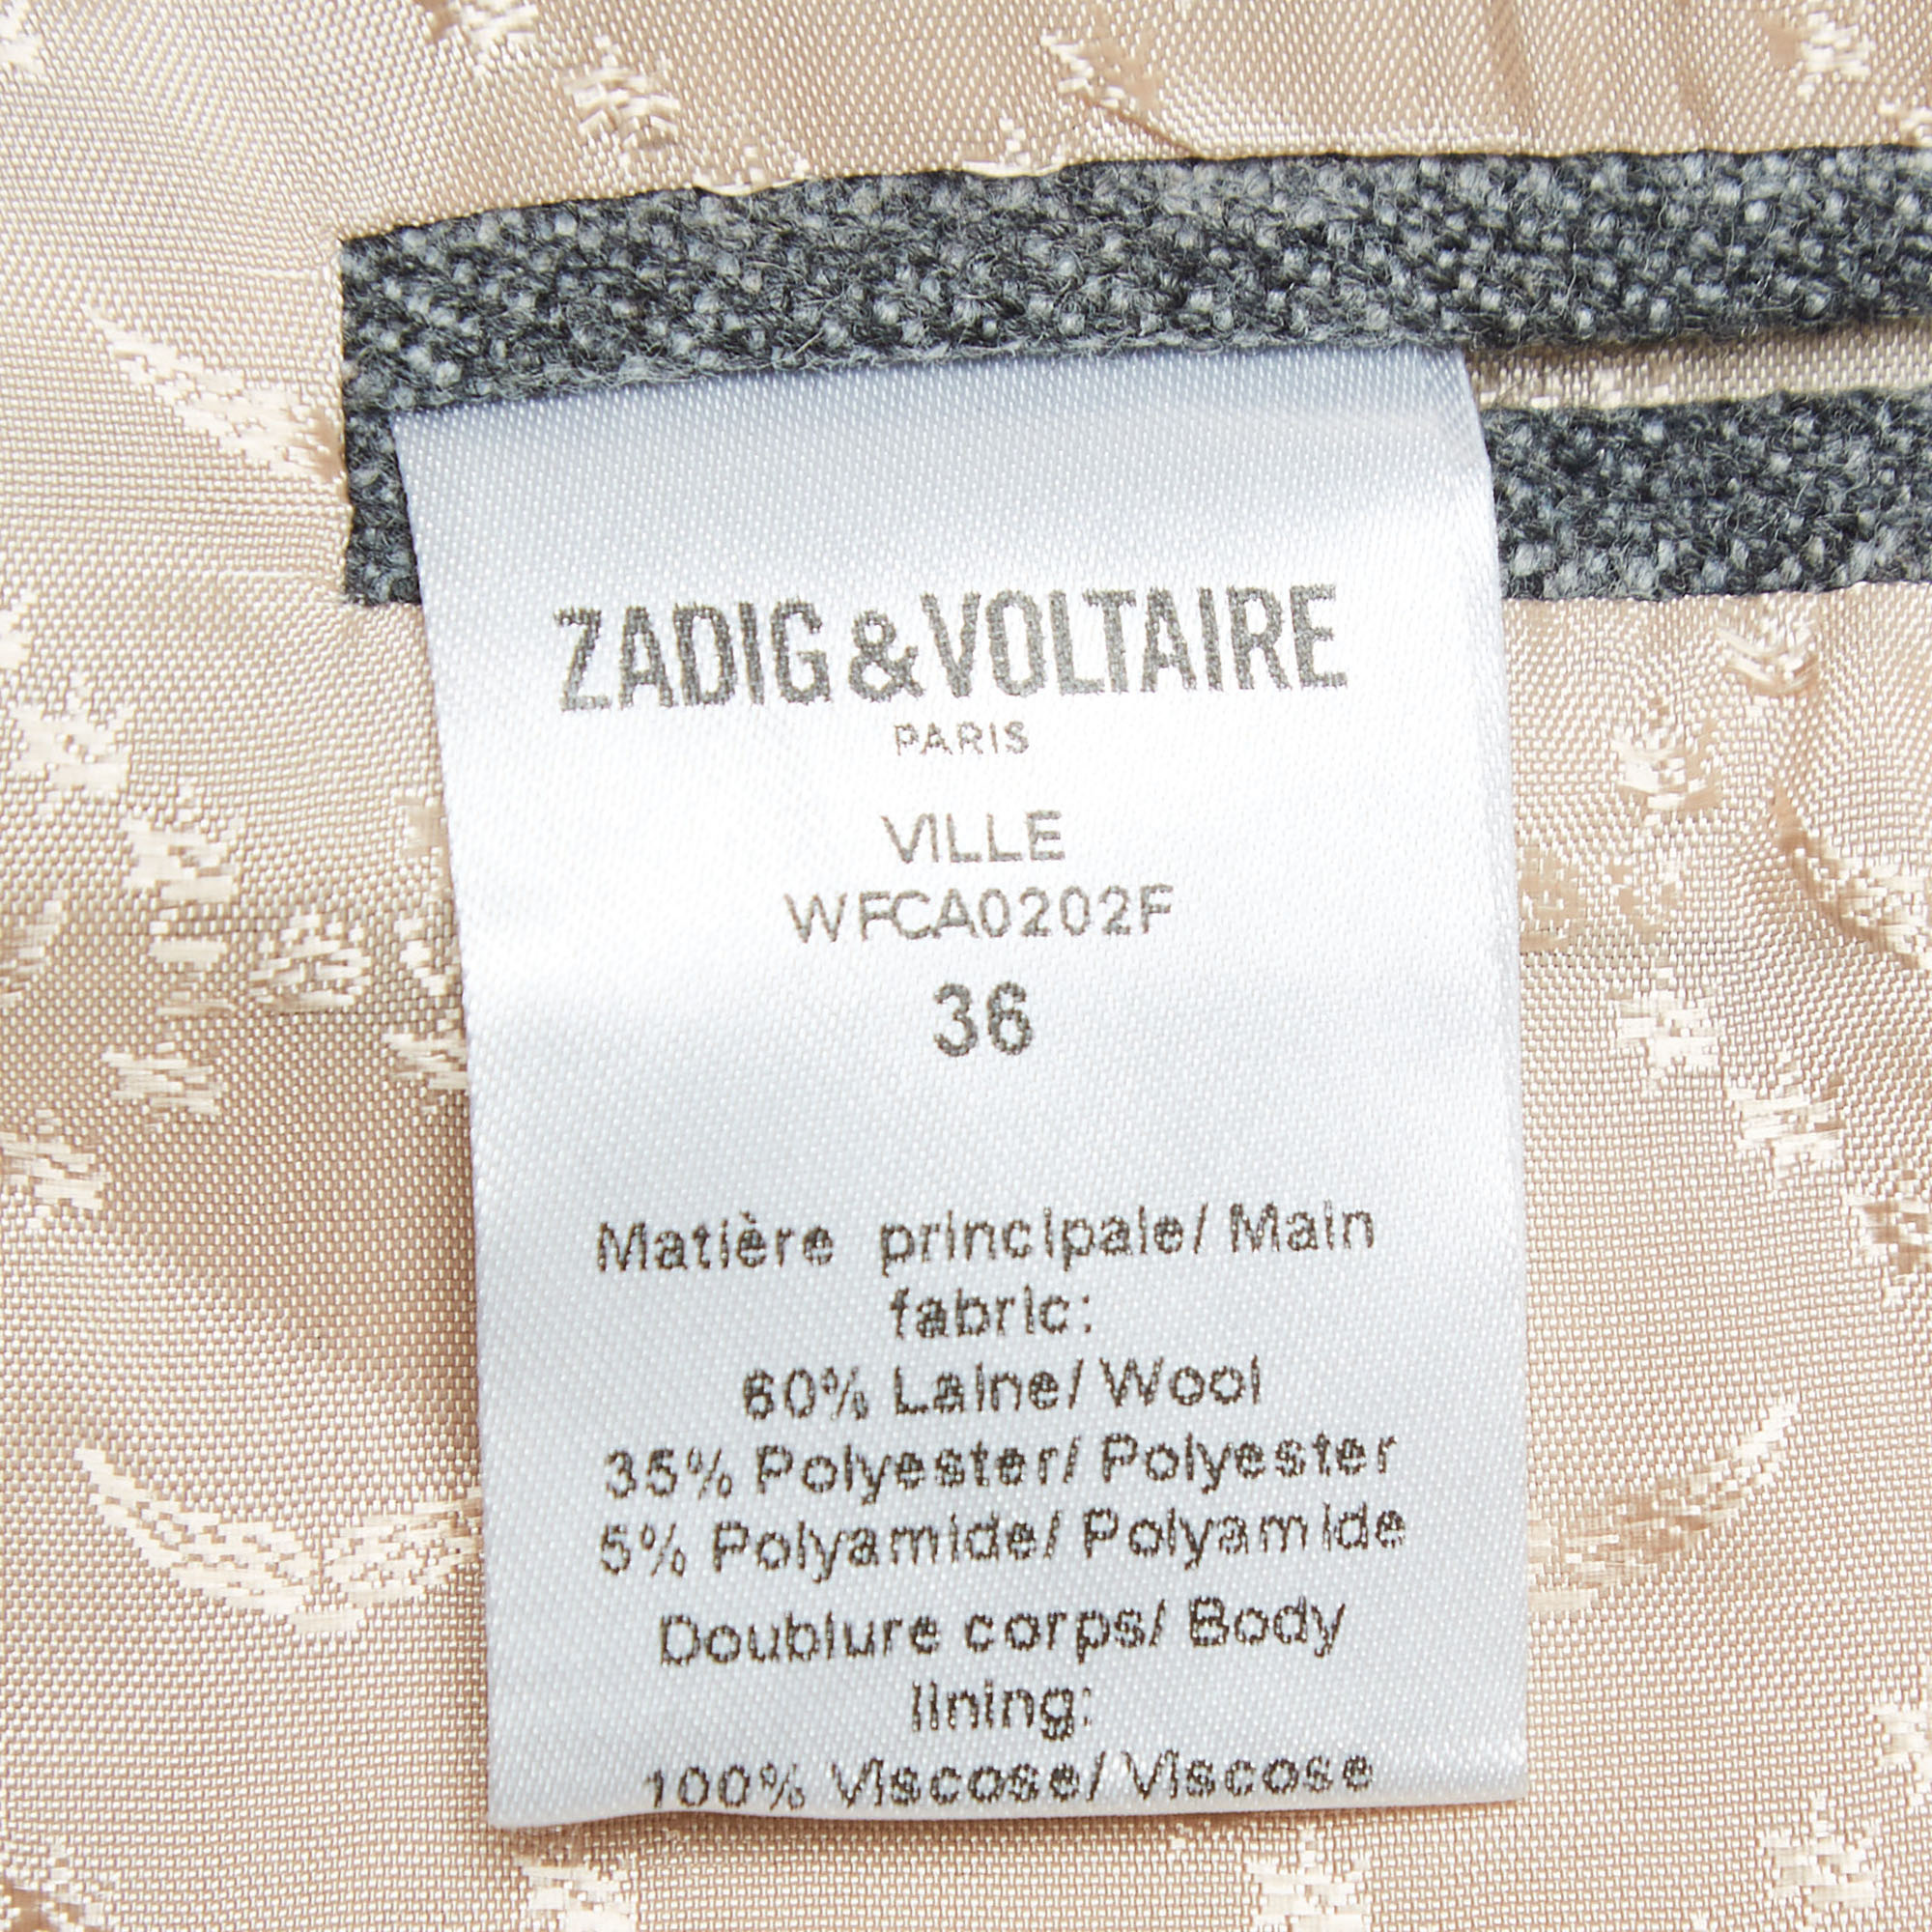 Zadig & Voltaire Grey Patterned Wool Blend Jacket S